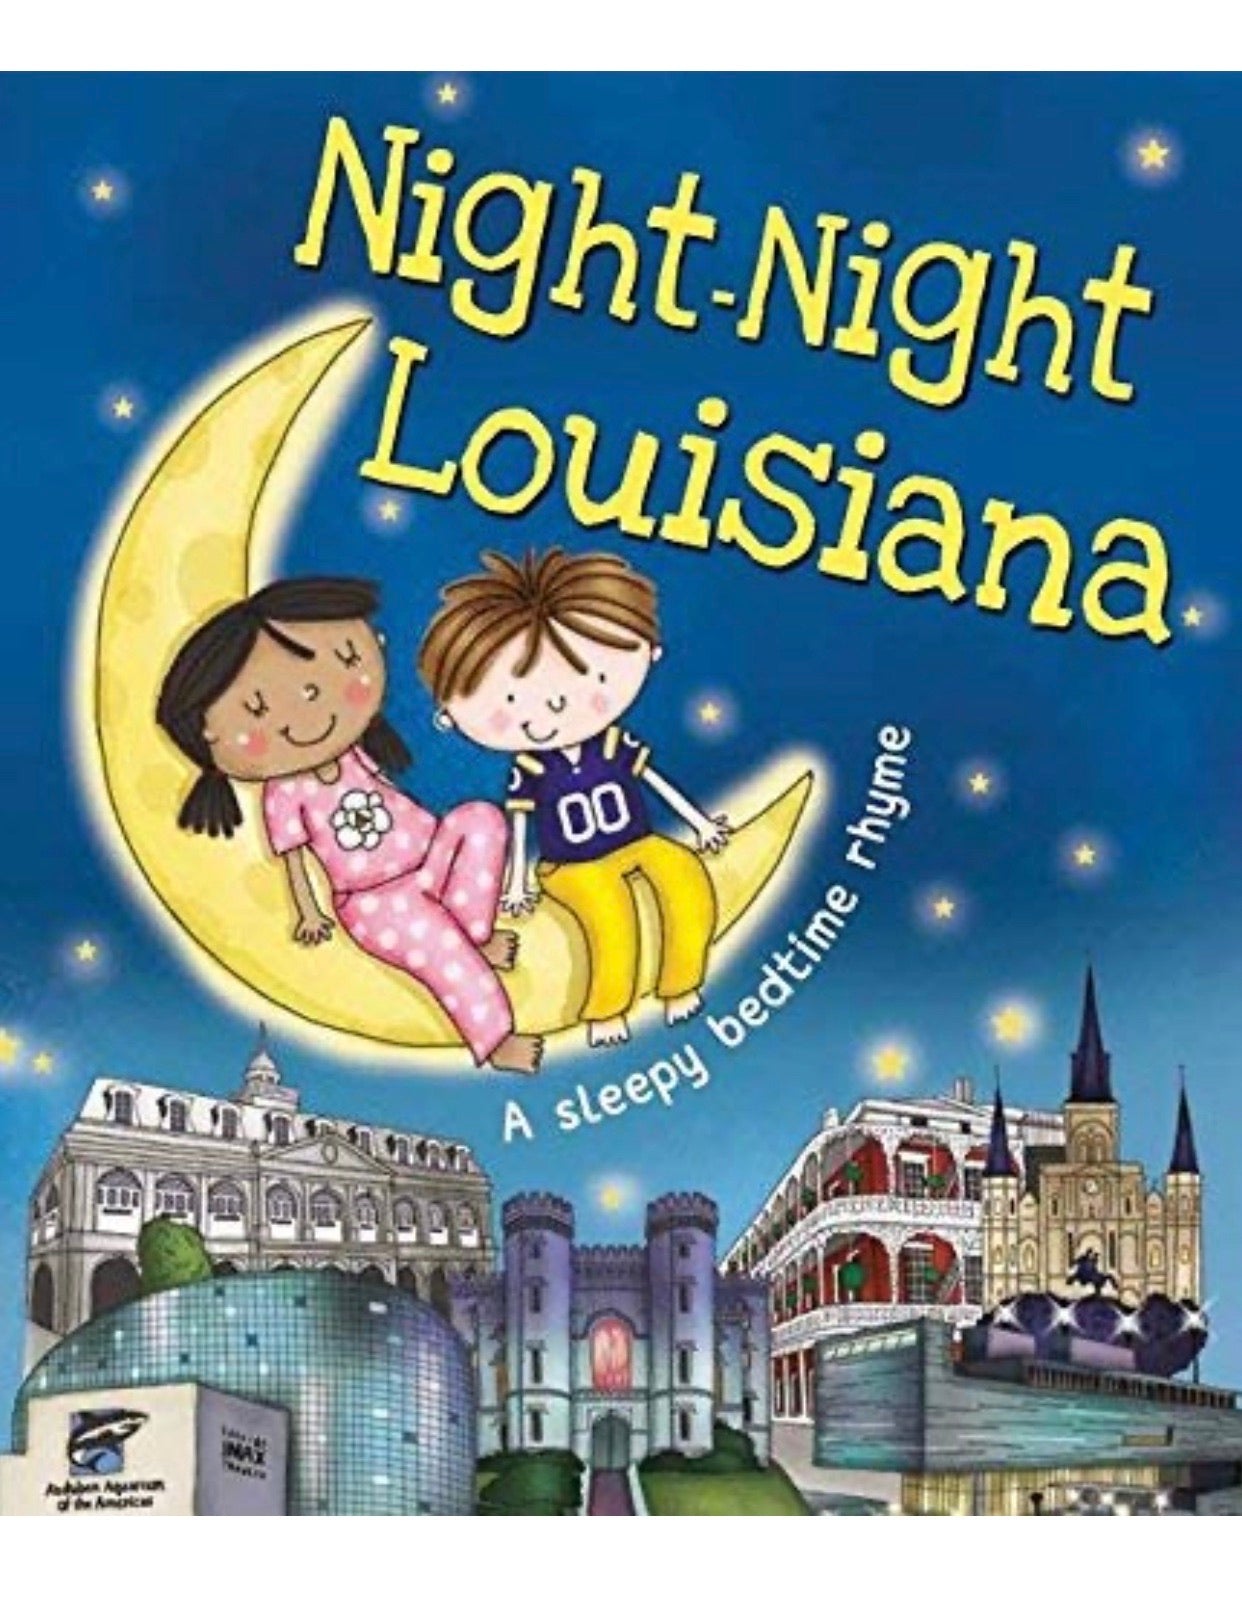 Night-Night Louisiana Book